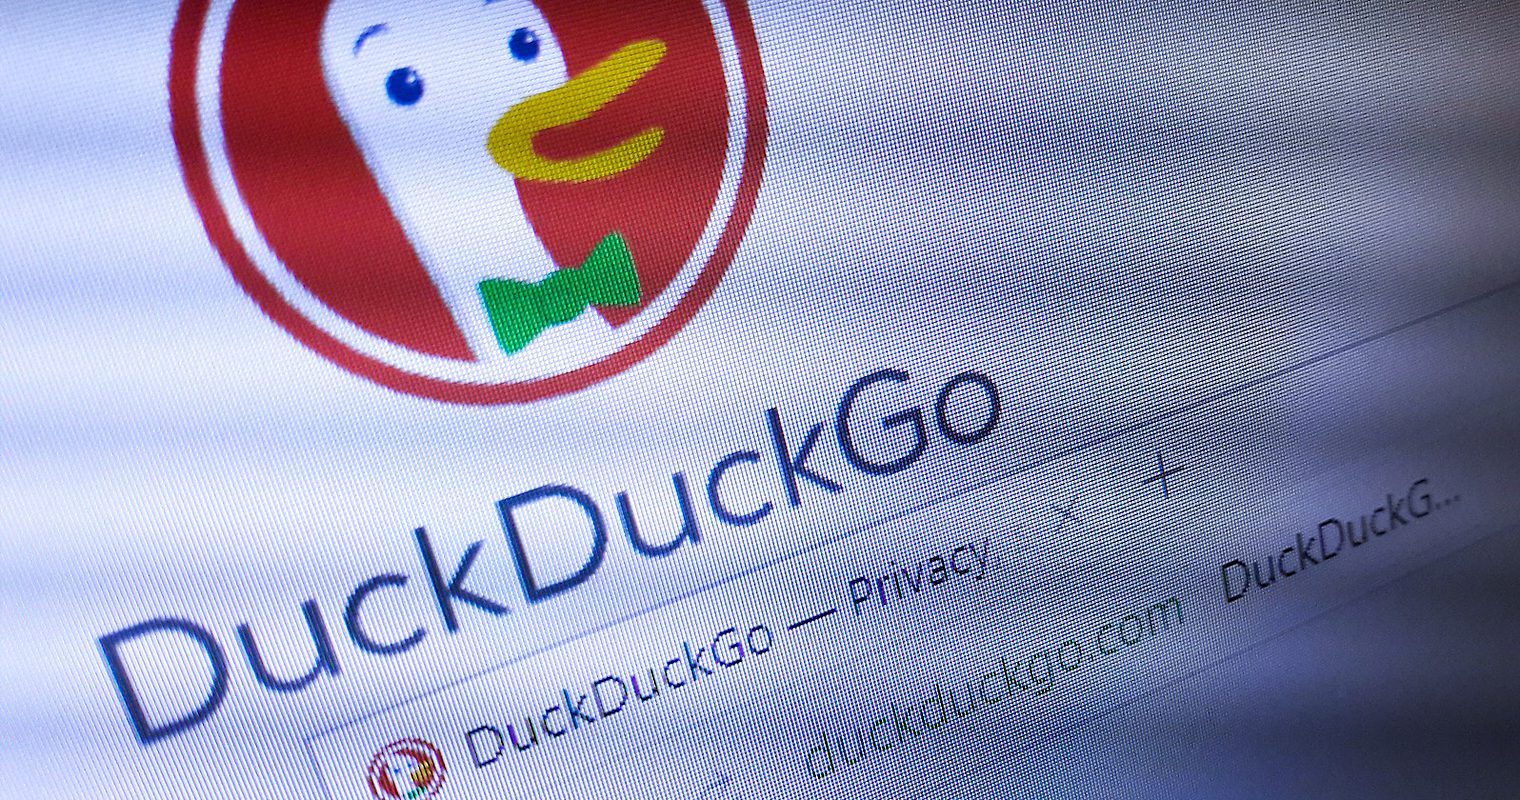 Google’s Danny Sullivan Responds Directly to DuckDuckGo’s Anti-Privacy Claims